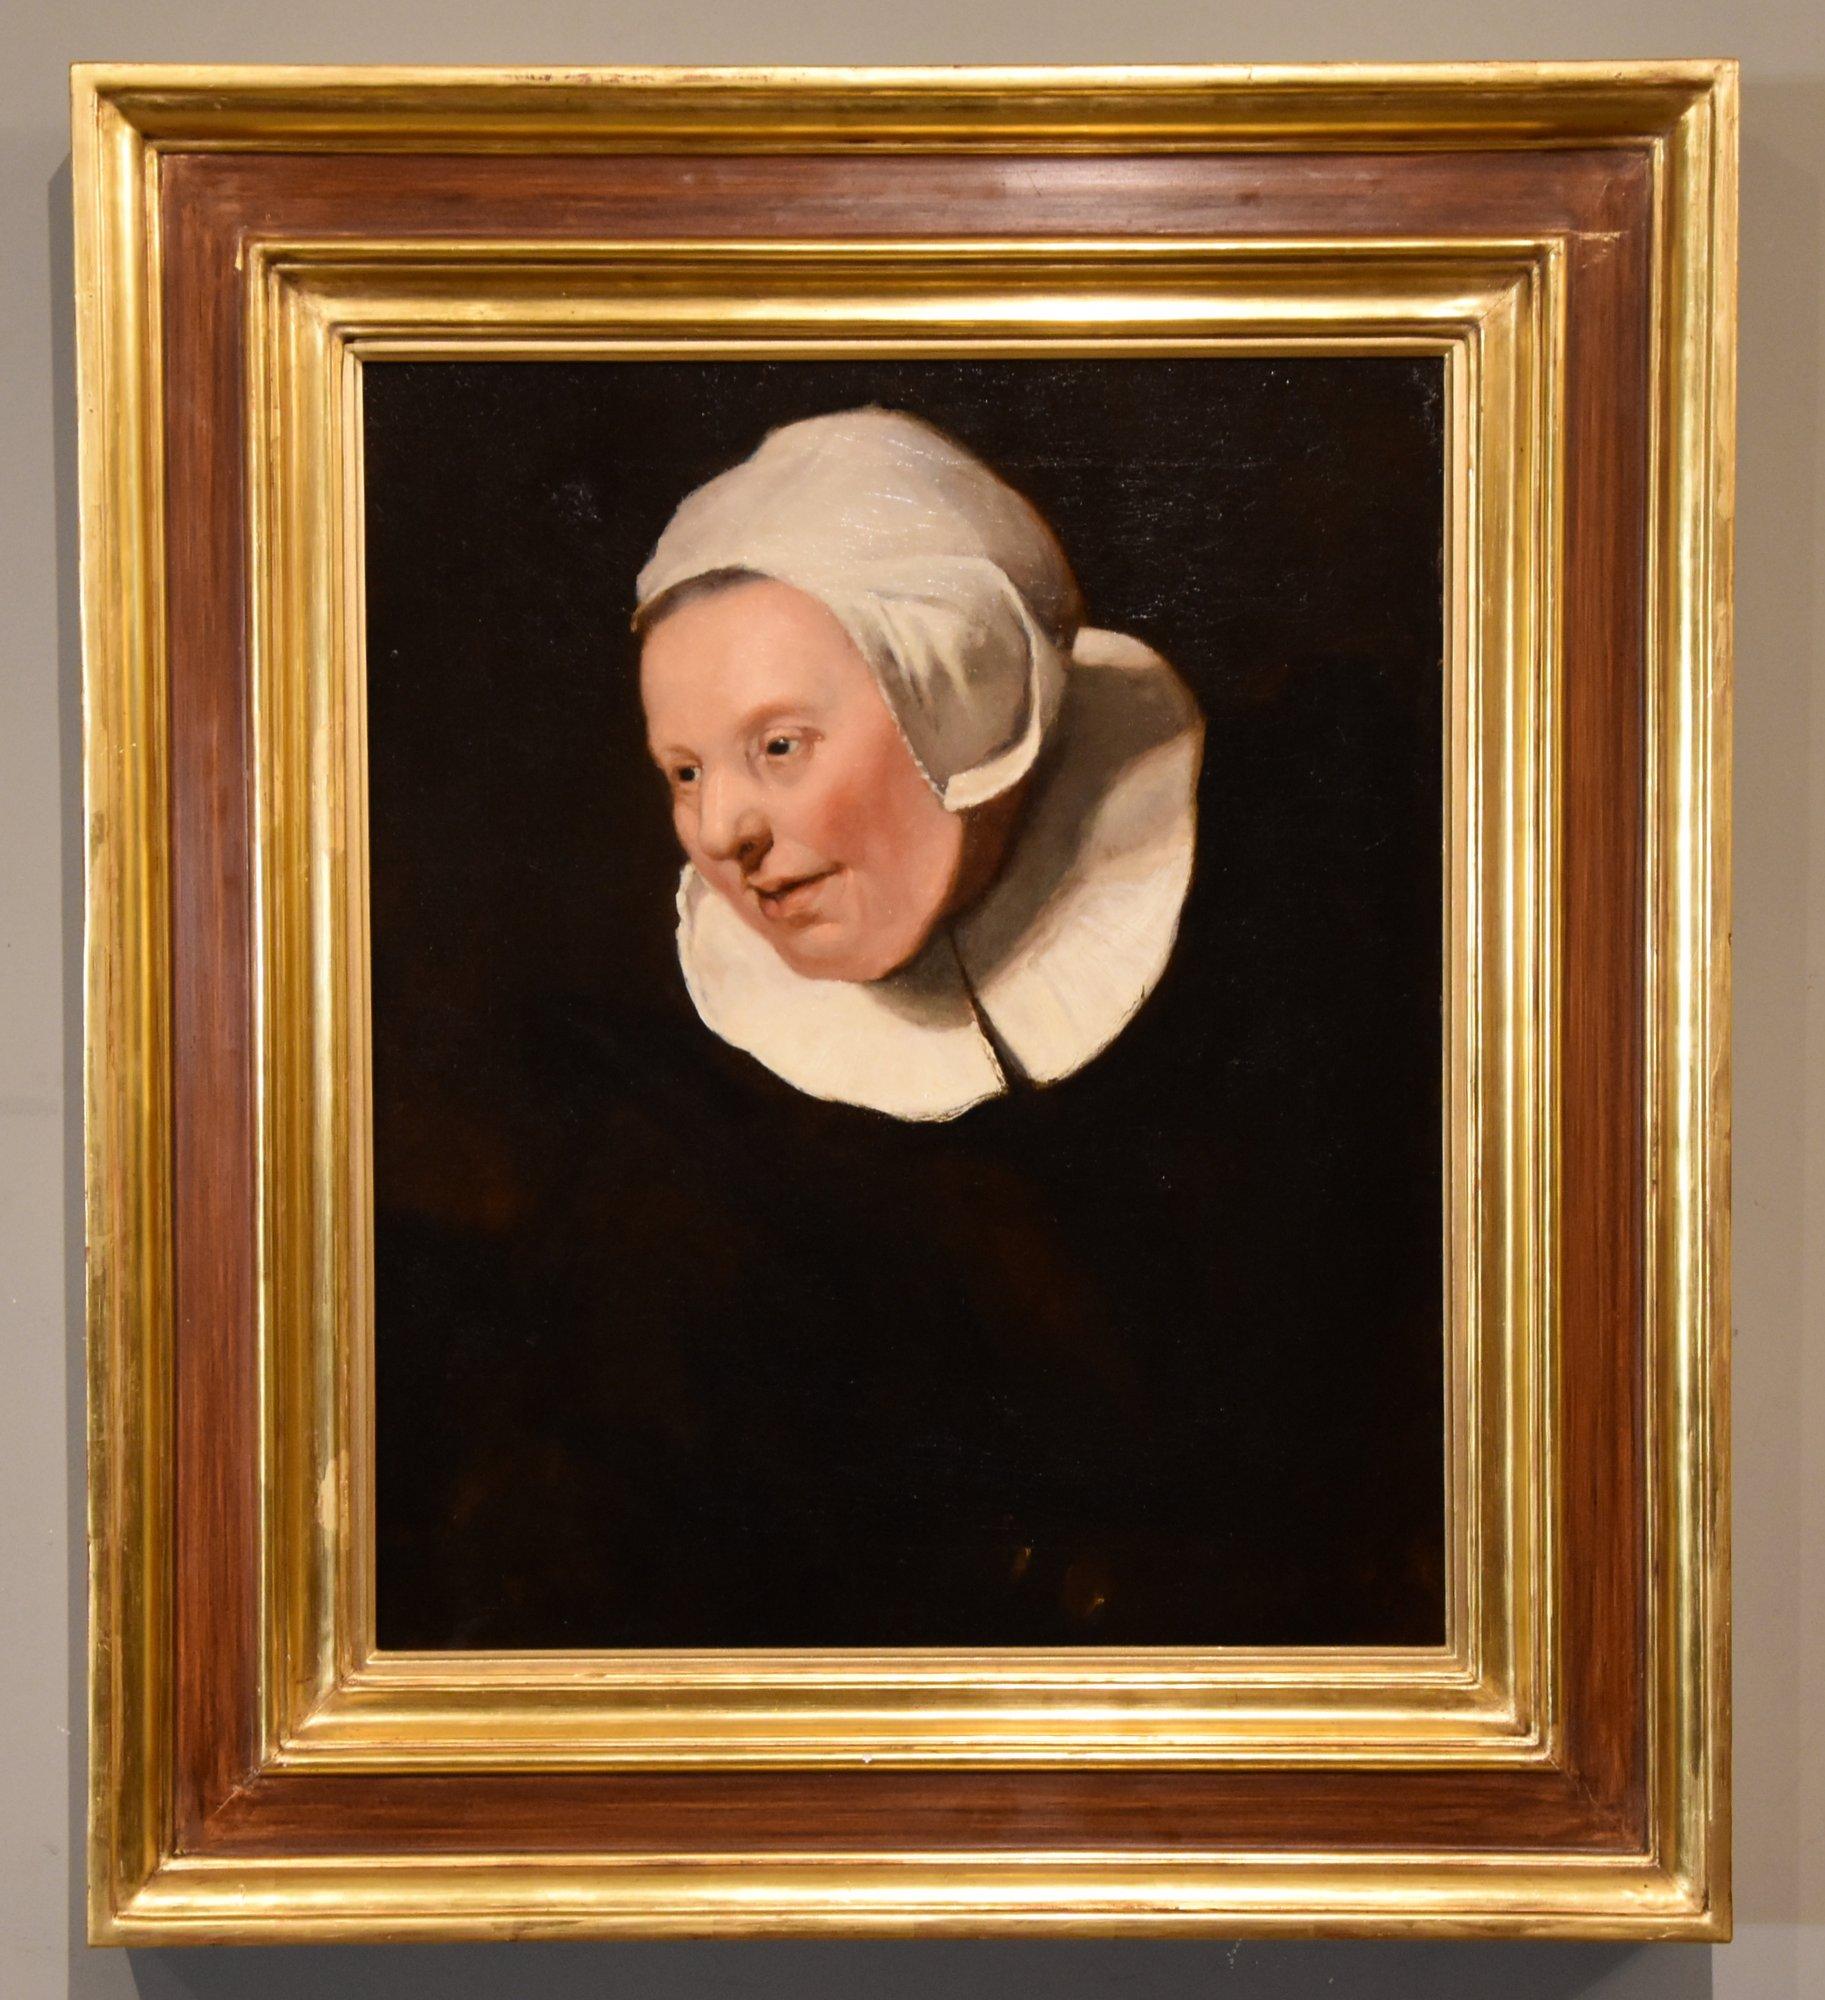 (After) Rembrandt van Rijn  Portrait Painting - Oil Painting after Rembrandt van Rijn "The Shipbuilders Wife"